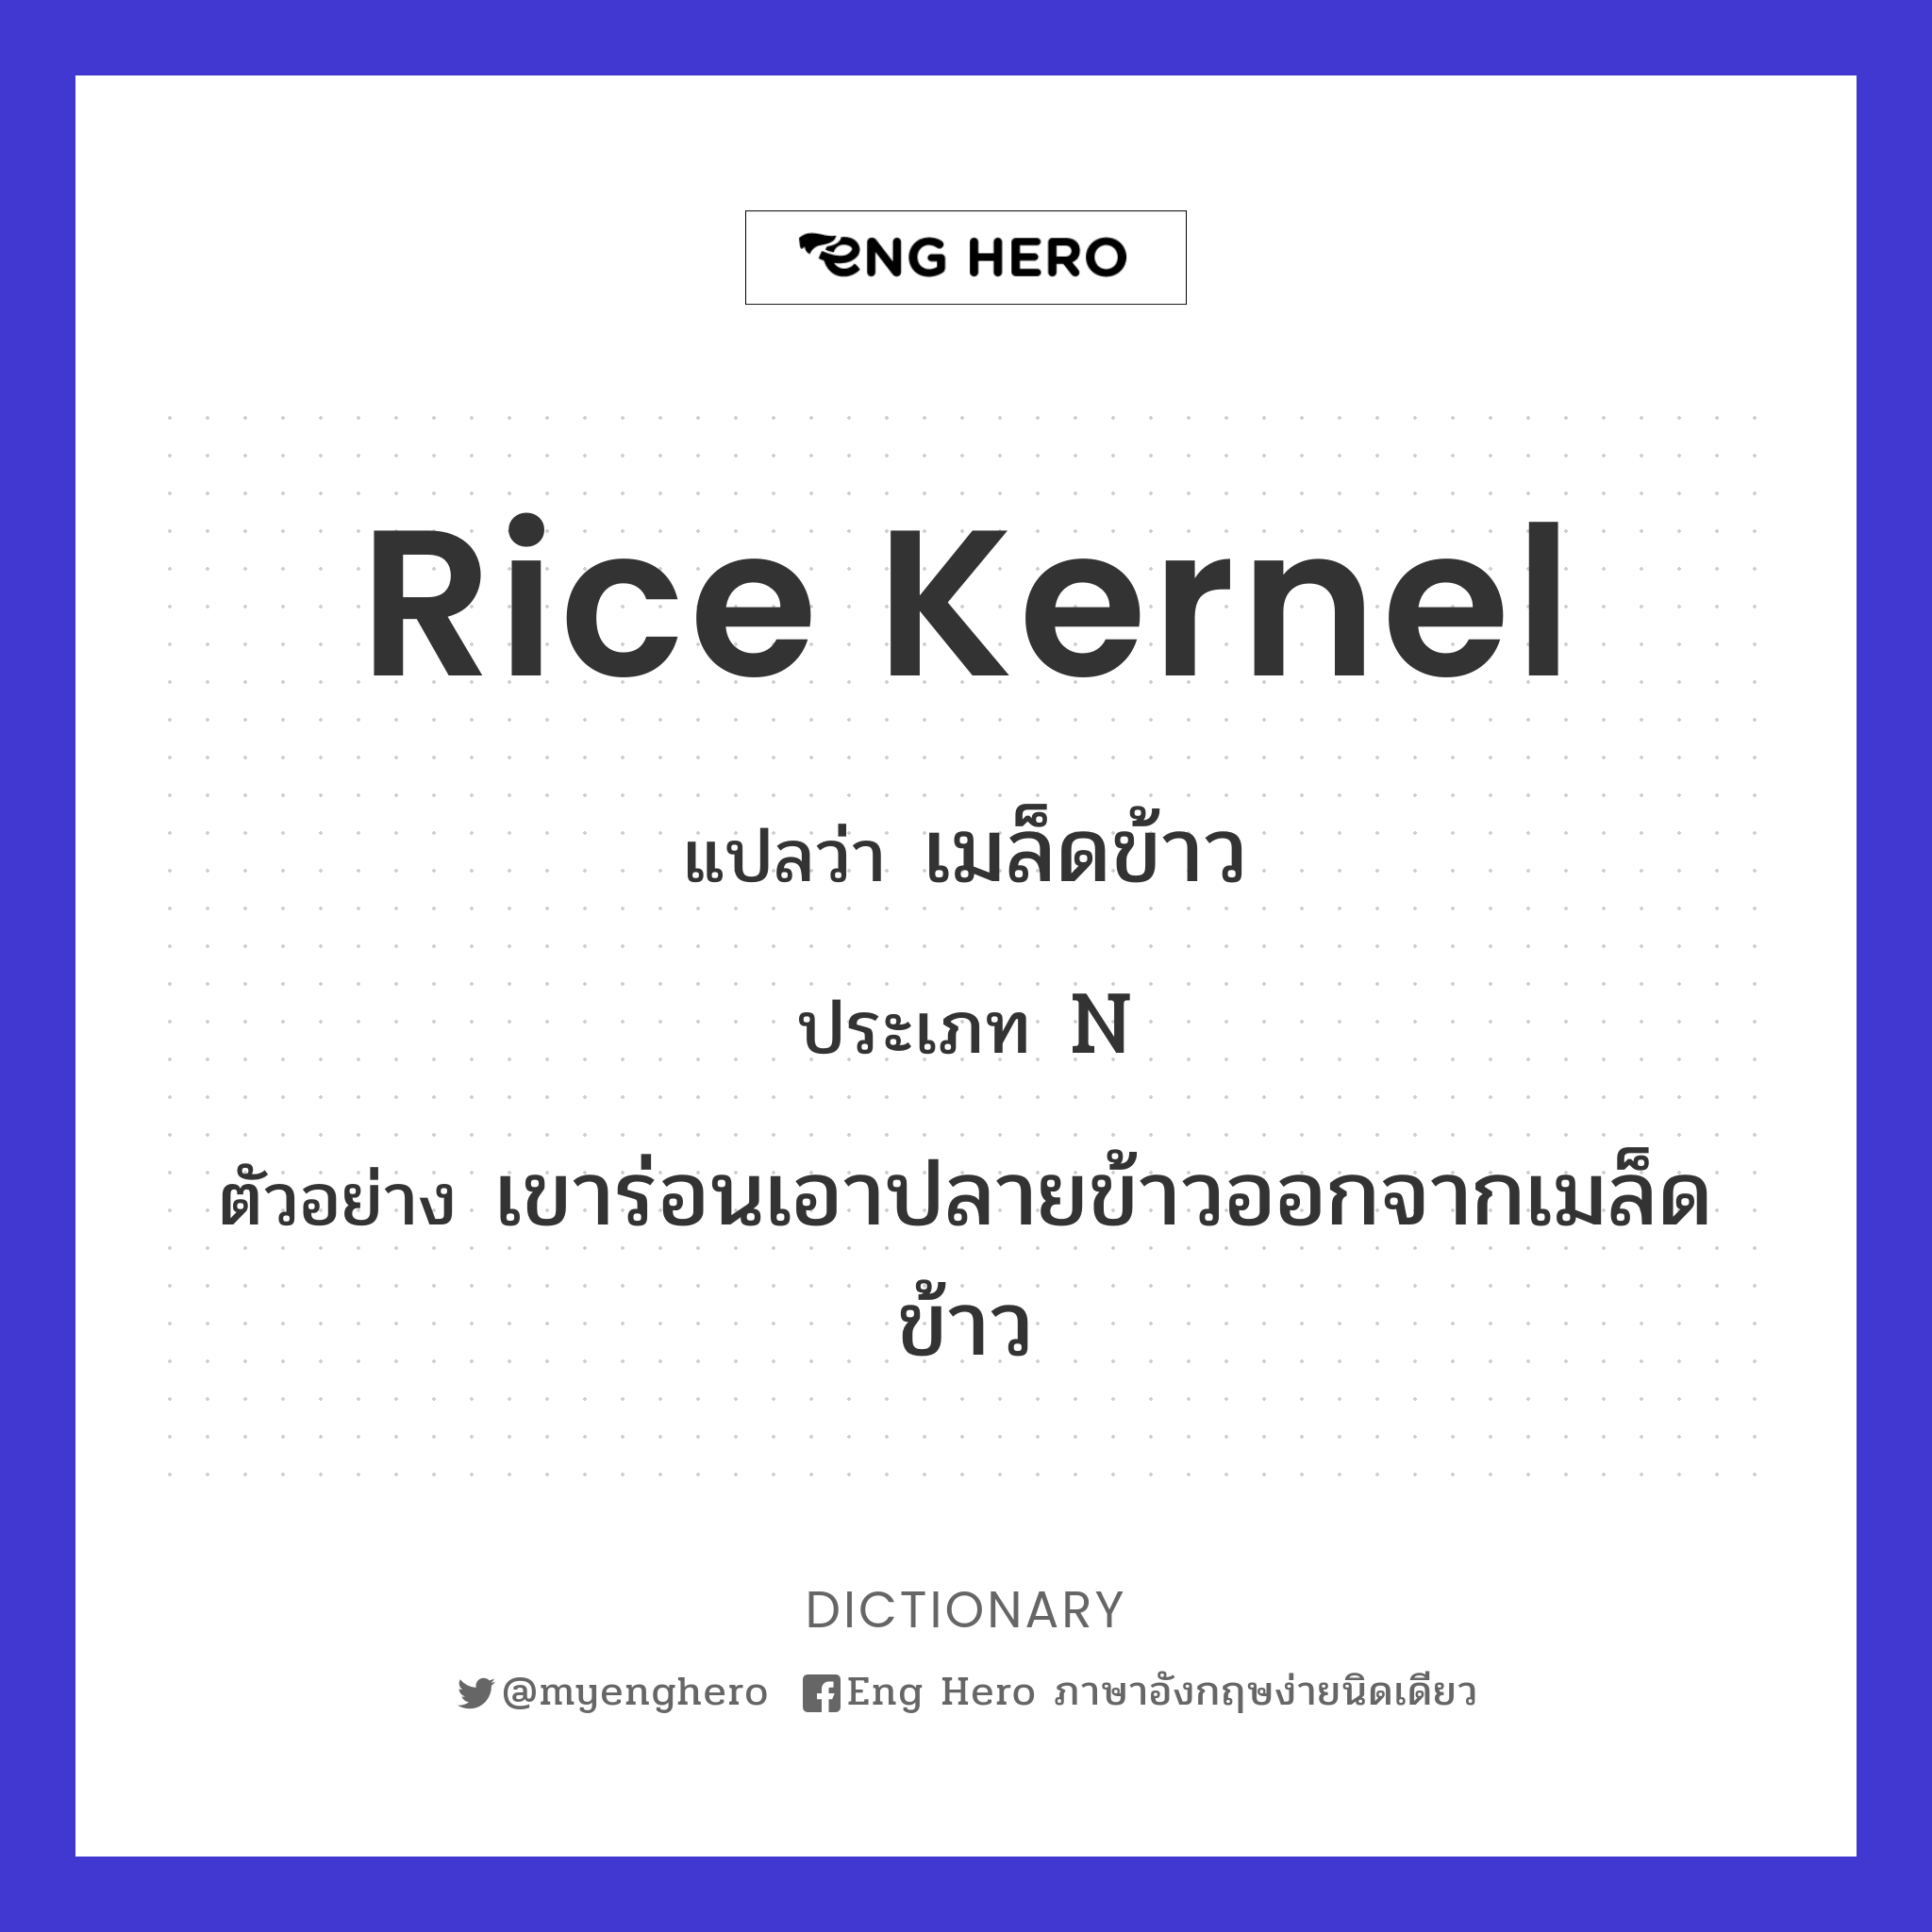 rice kernel